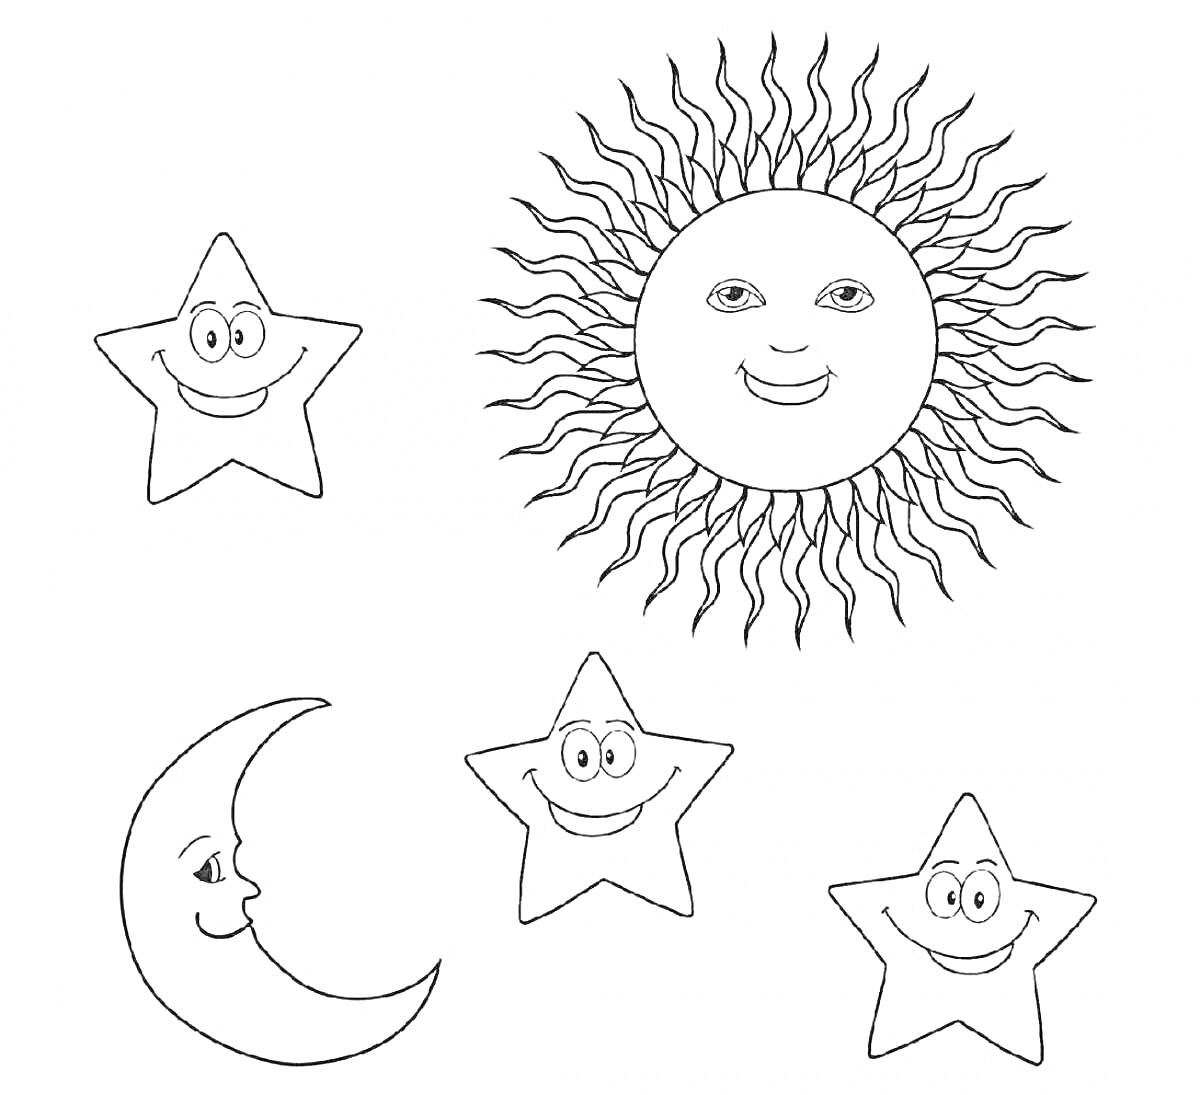 Раскраска Солнце с лучами, месяц, три звезды с лицами